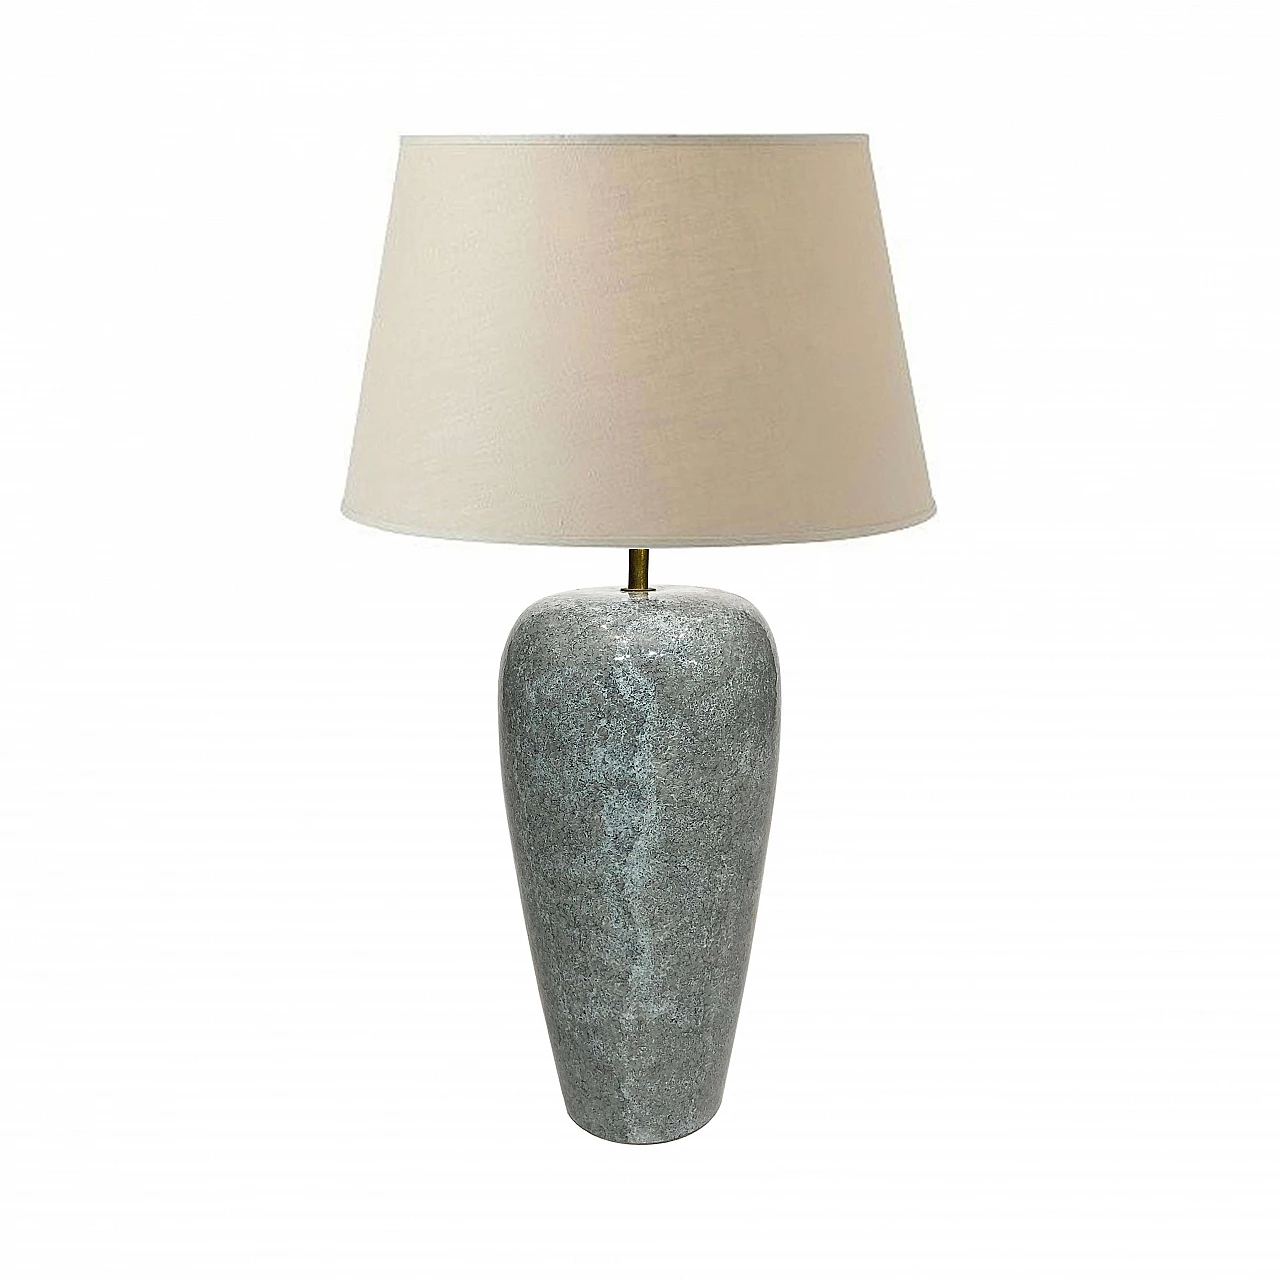 Granite effect ceramic and brass table lamp, 80s 1245263